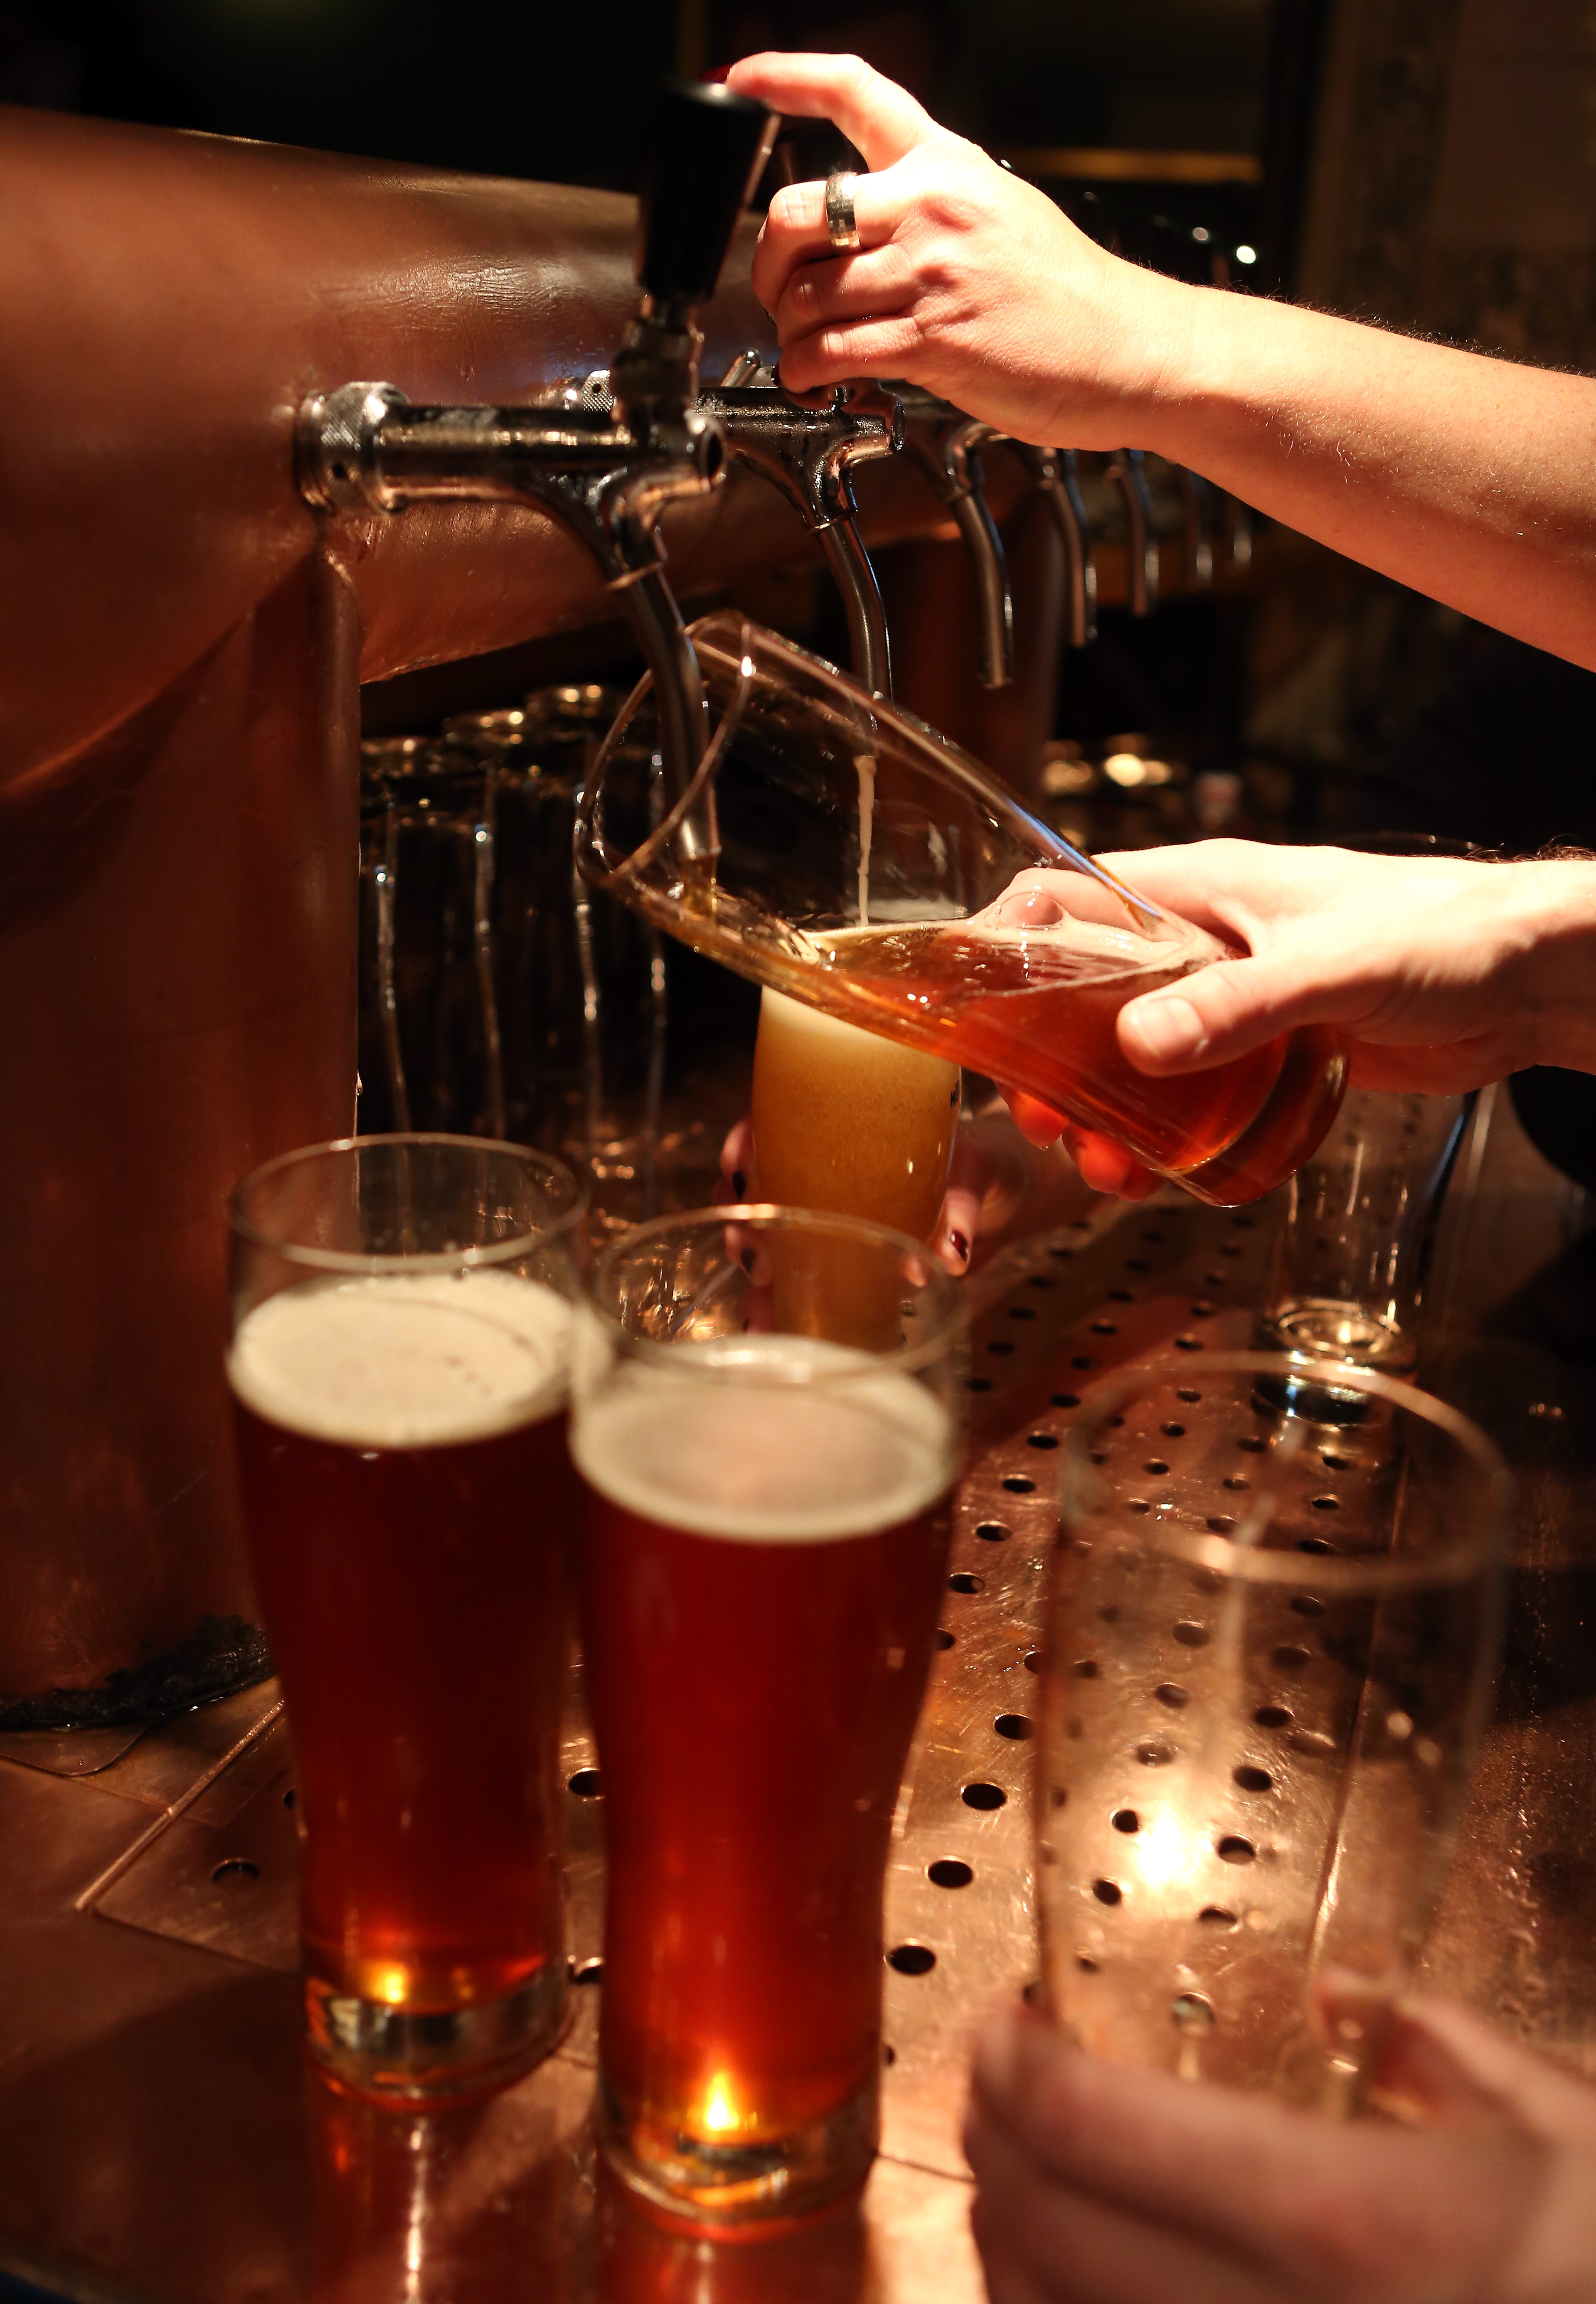 Artisanal Beer Brewers Find Growing Niche In Berlin